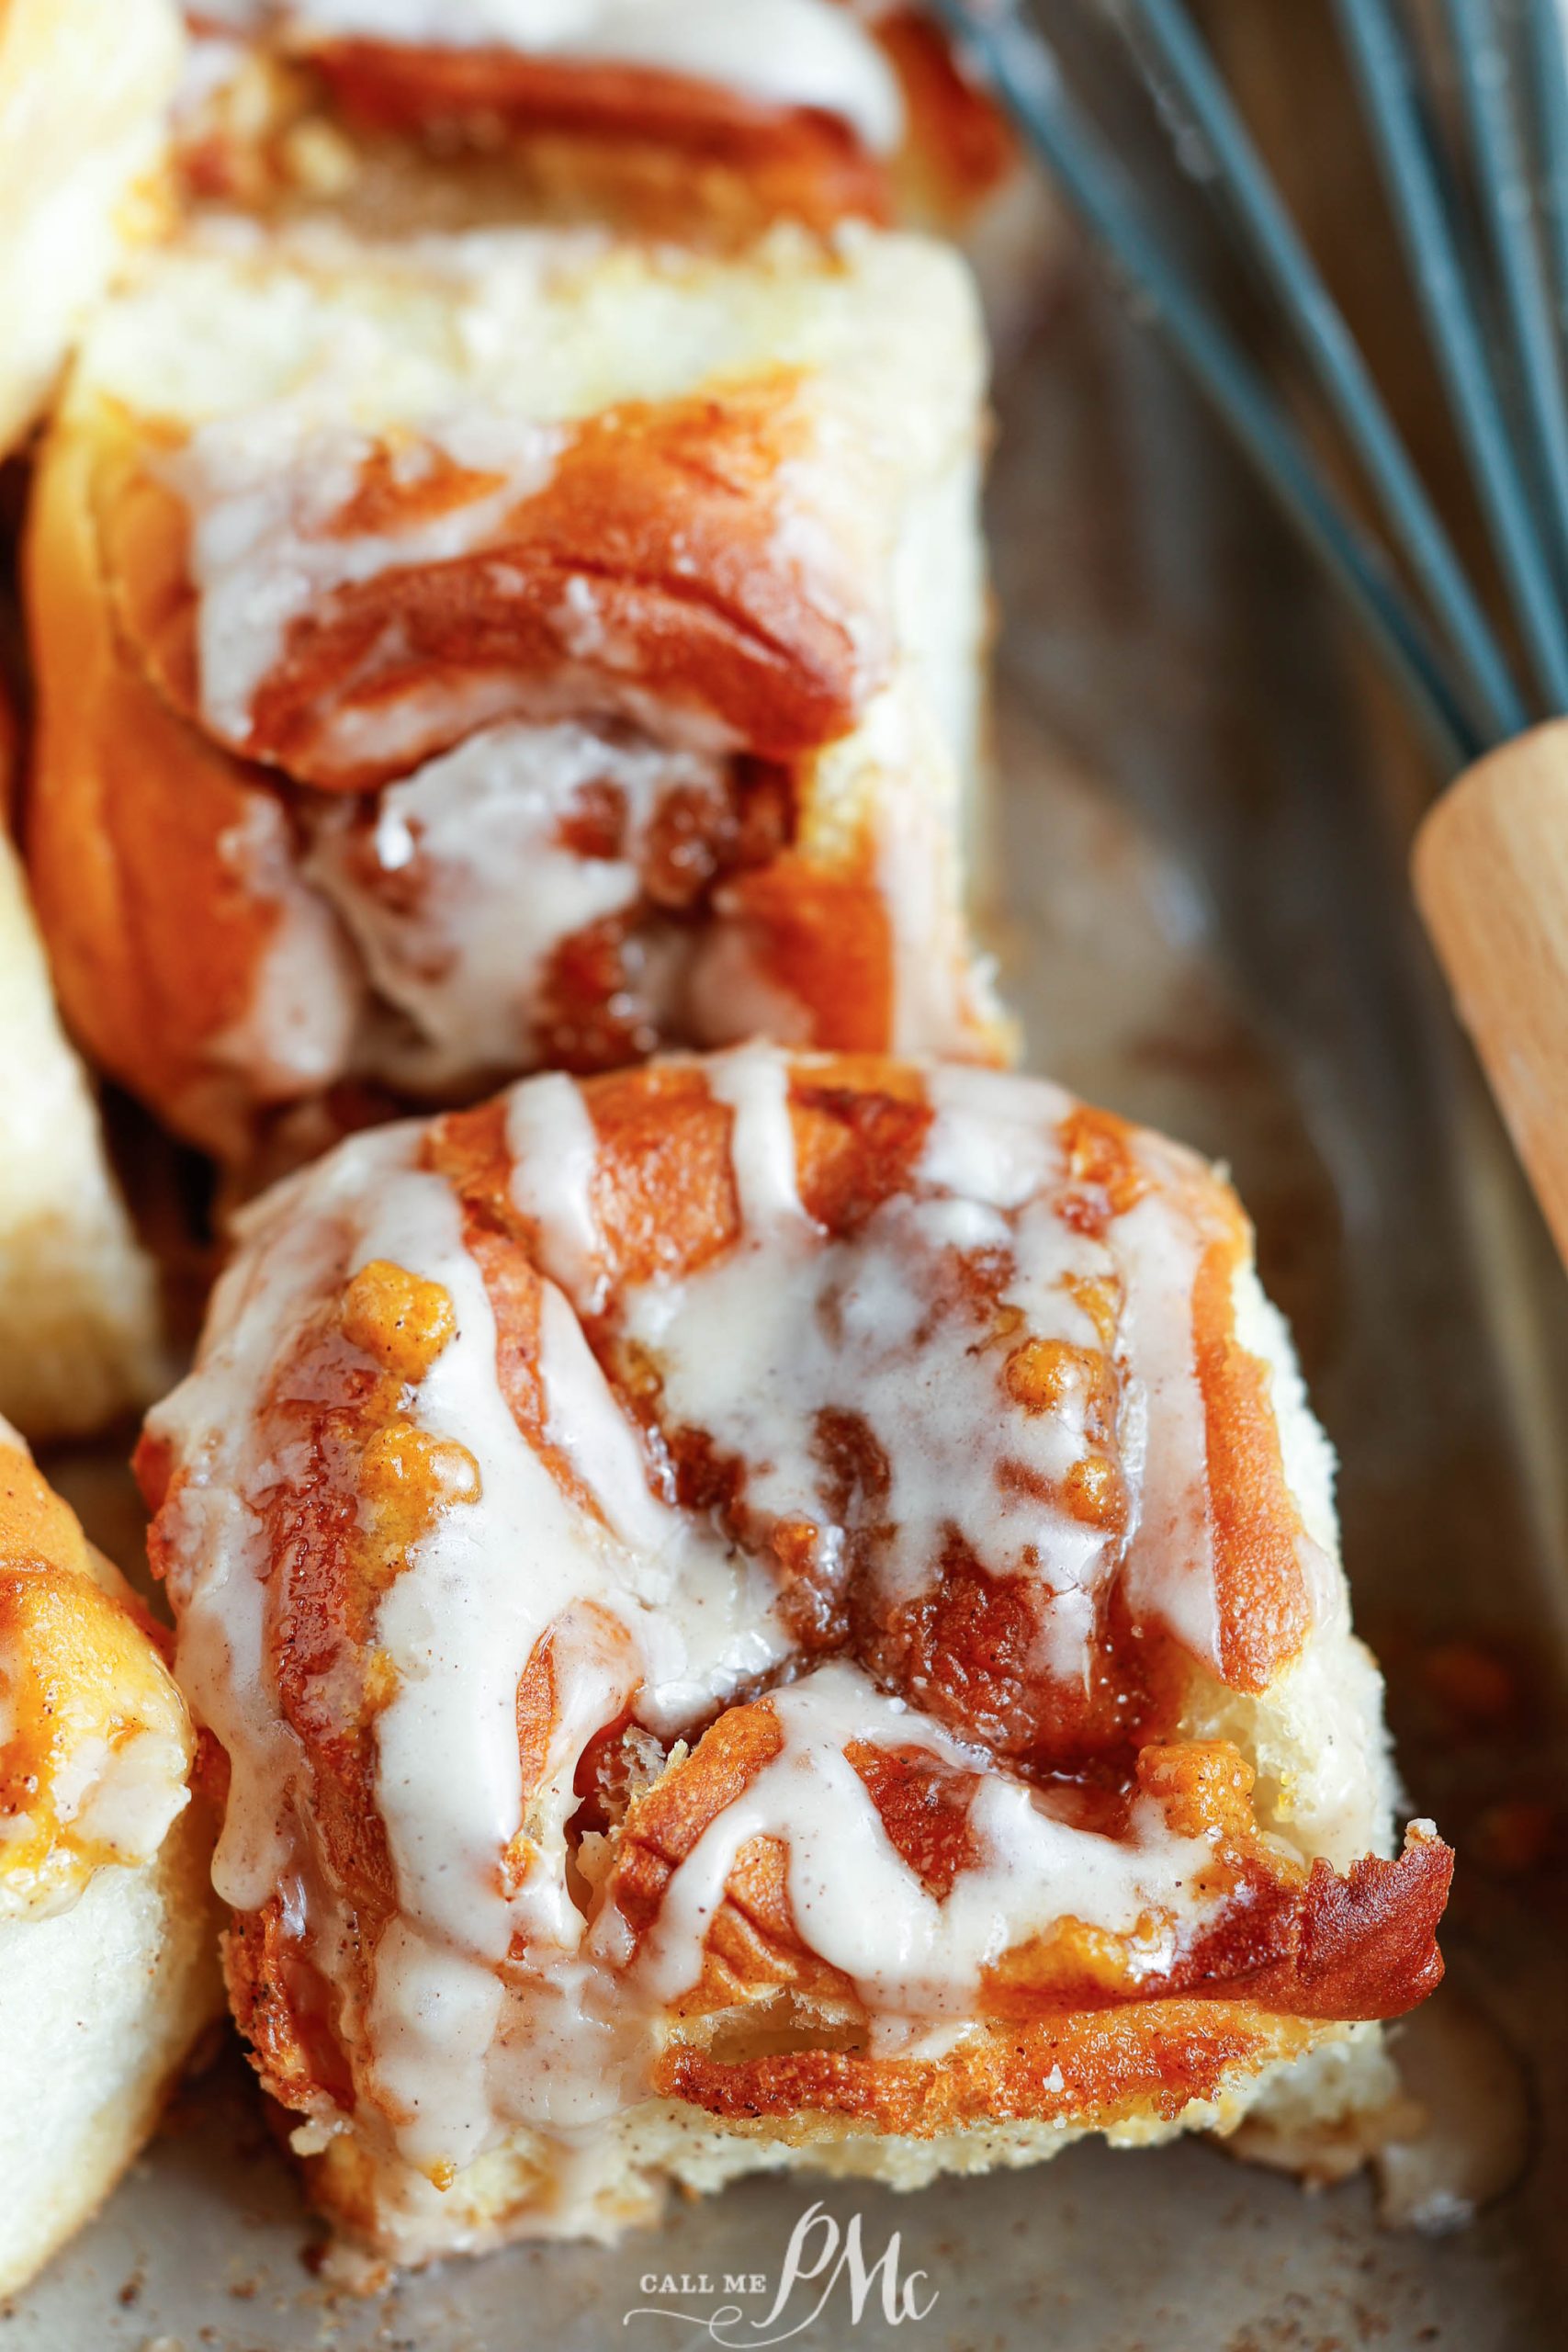 Sweet rolls stuffed and glazed.